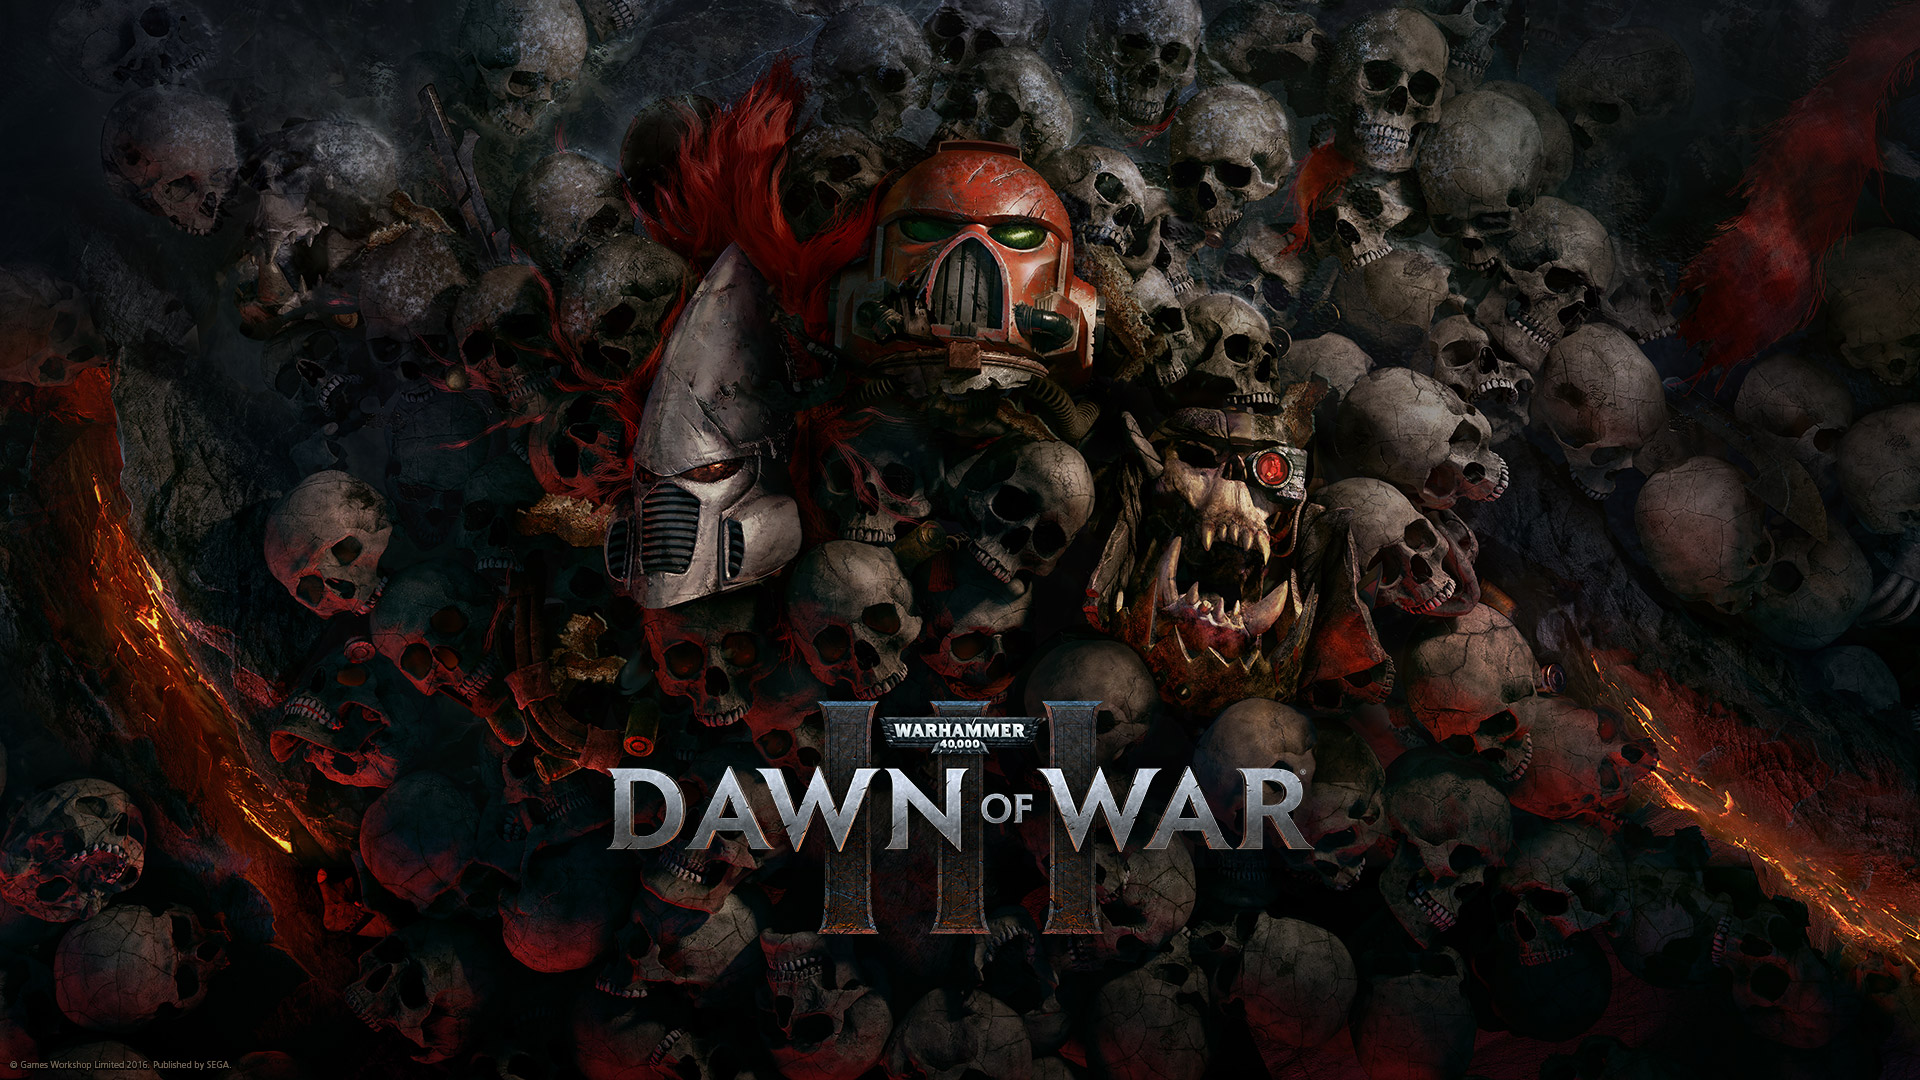 dawn of war3 AMD RYZEN 3 2200G RAVEN RIDGE PROCESSOR REVIEW